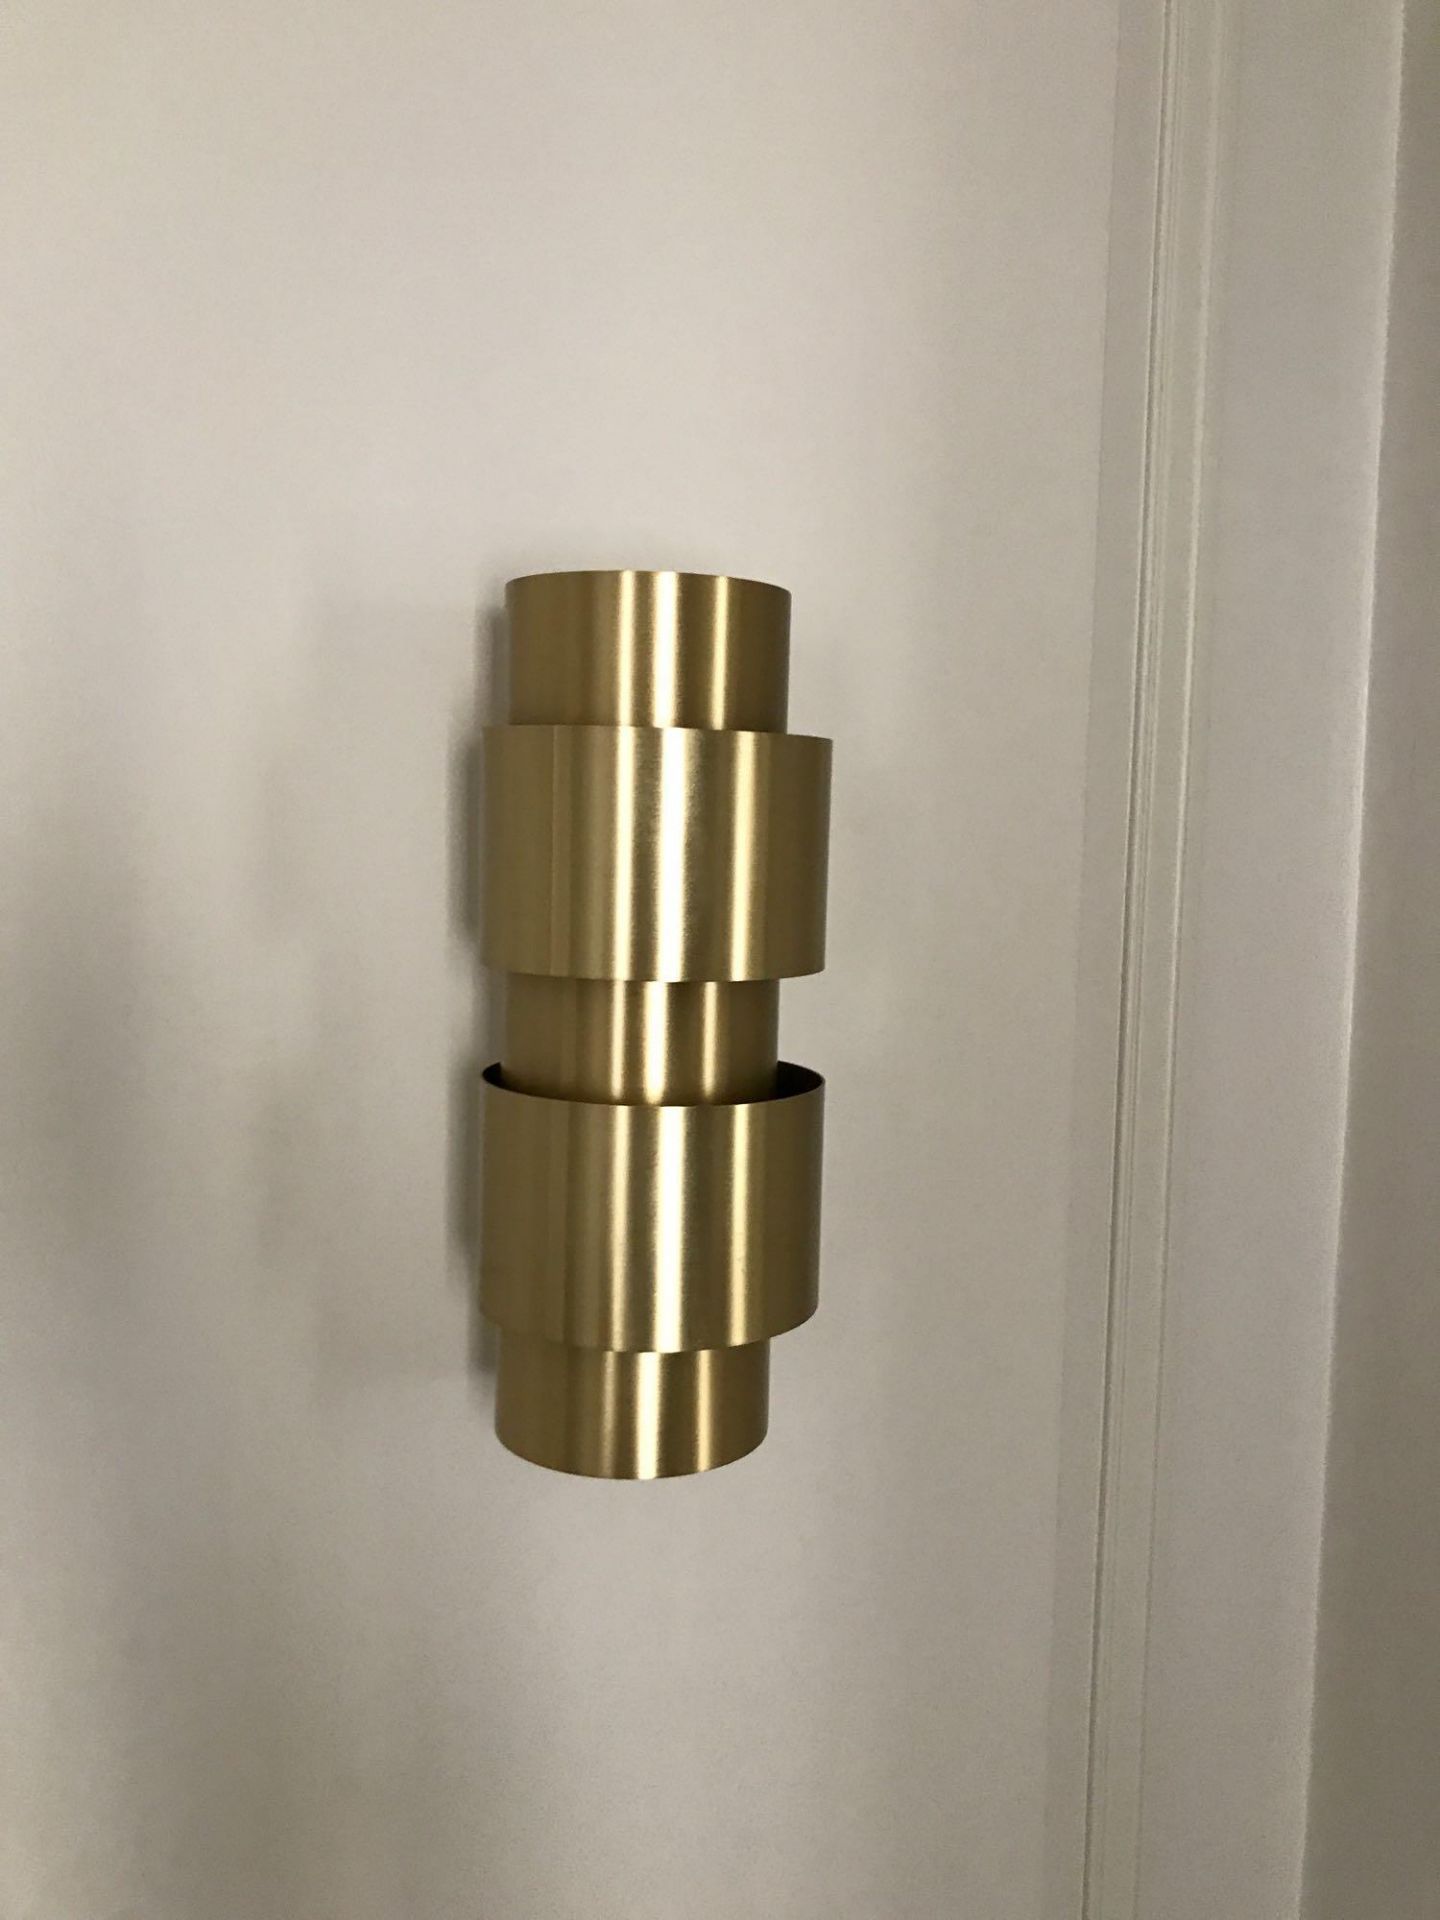 2 x LED Antique Brass 2 Light Indoor Wall Light Antique Brass 30CM (Room 124) - Image 2 of 2